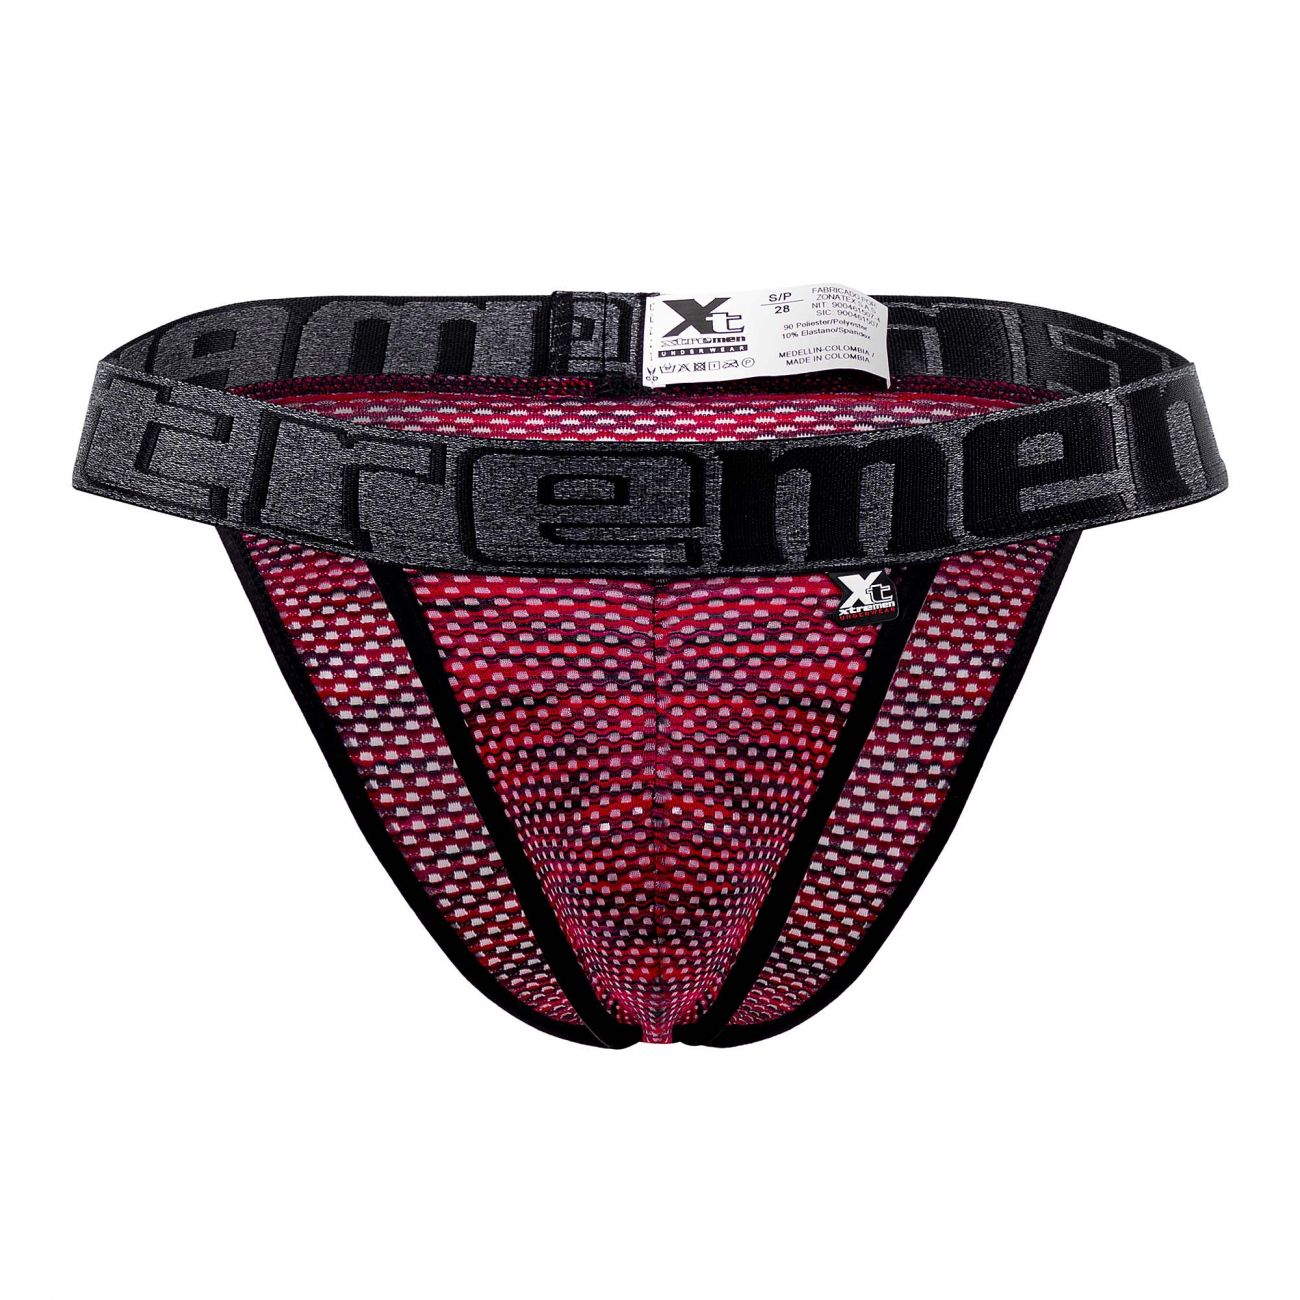 Xtremen 91098X Microfiber Mesh Bikini Red Plus Sizes